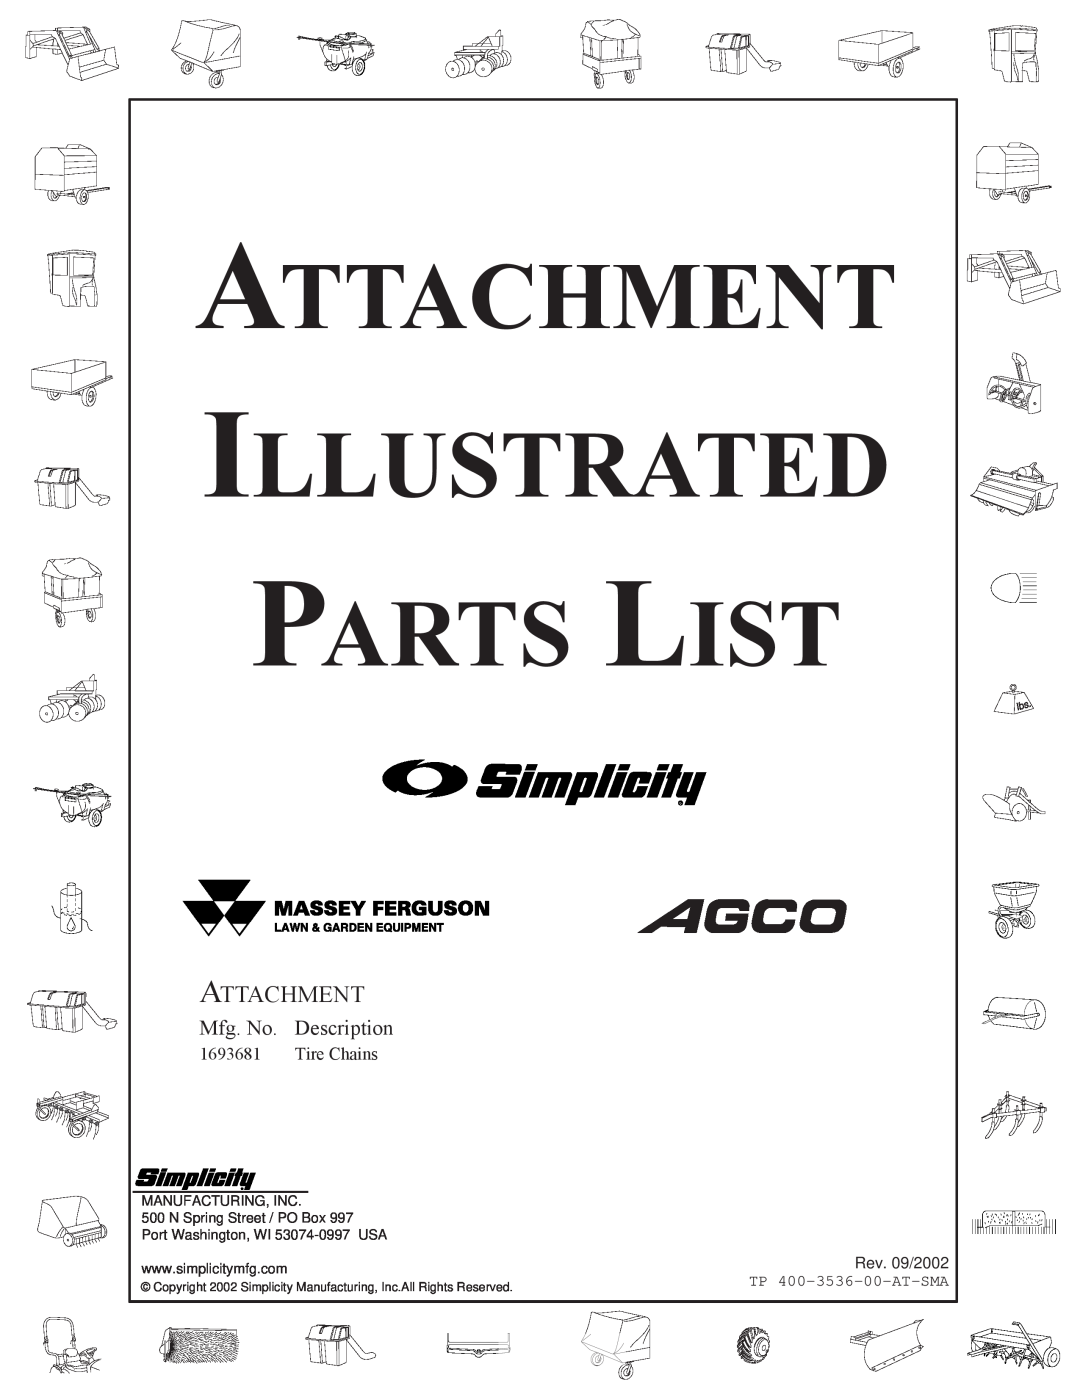 Snapper manual TP 400-3536-00-AT-SMA, Attachment Illustrated Parts List, Mfg. No, Description, 1693681, Tire Chains 